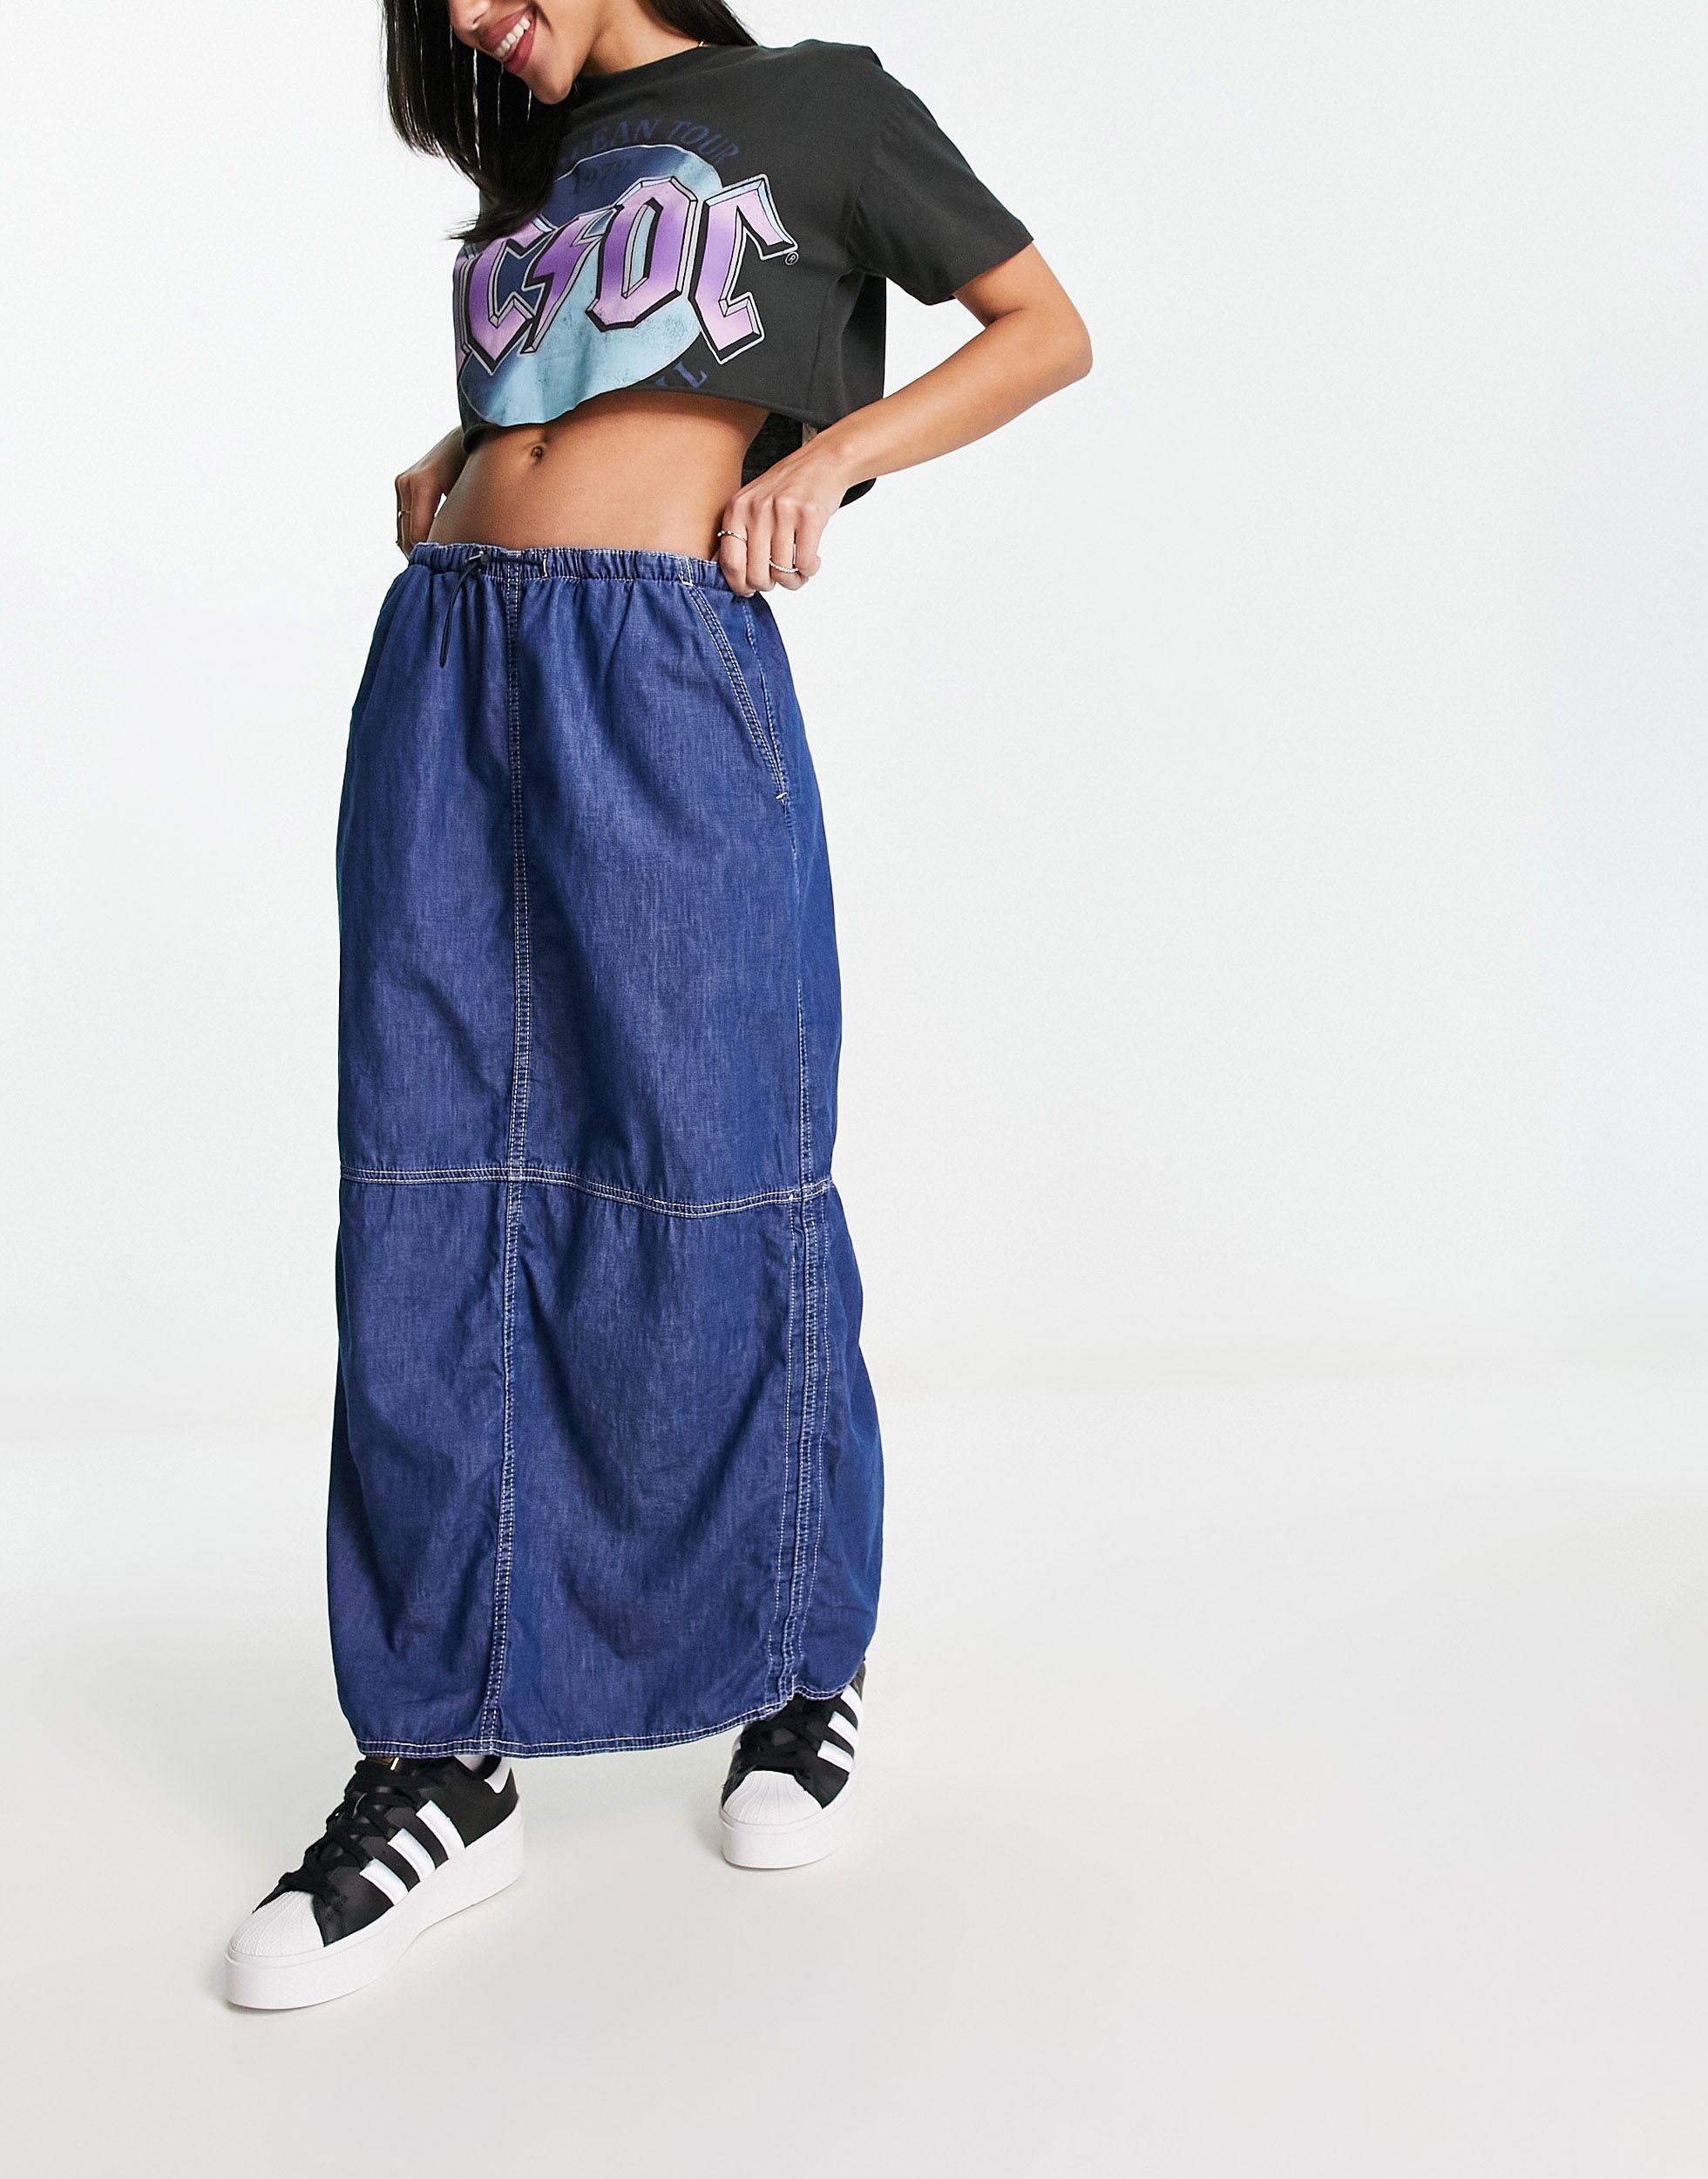 Discover 139+ bershka denim skirt latest - dedaotaonec